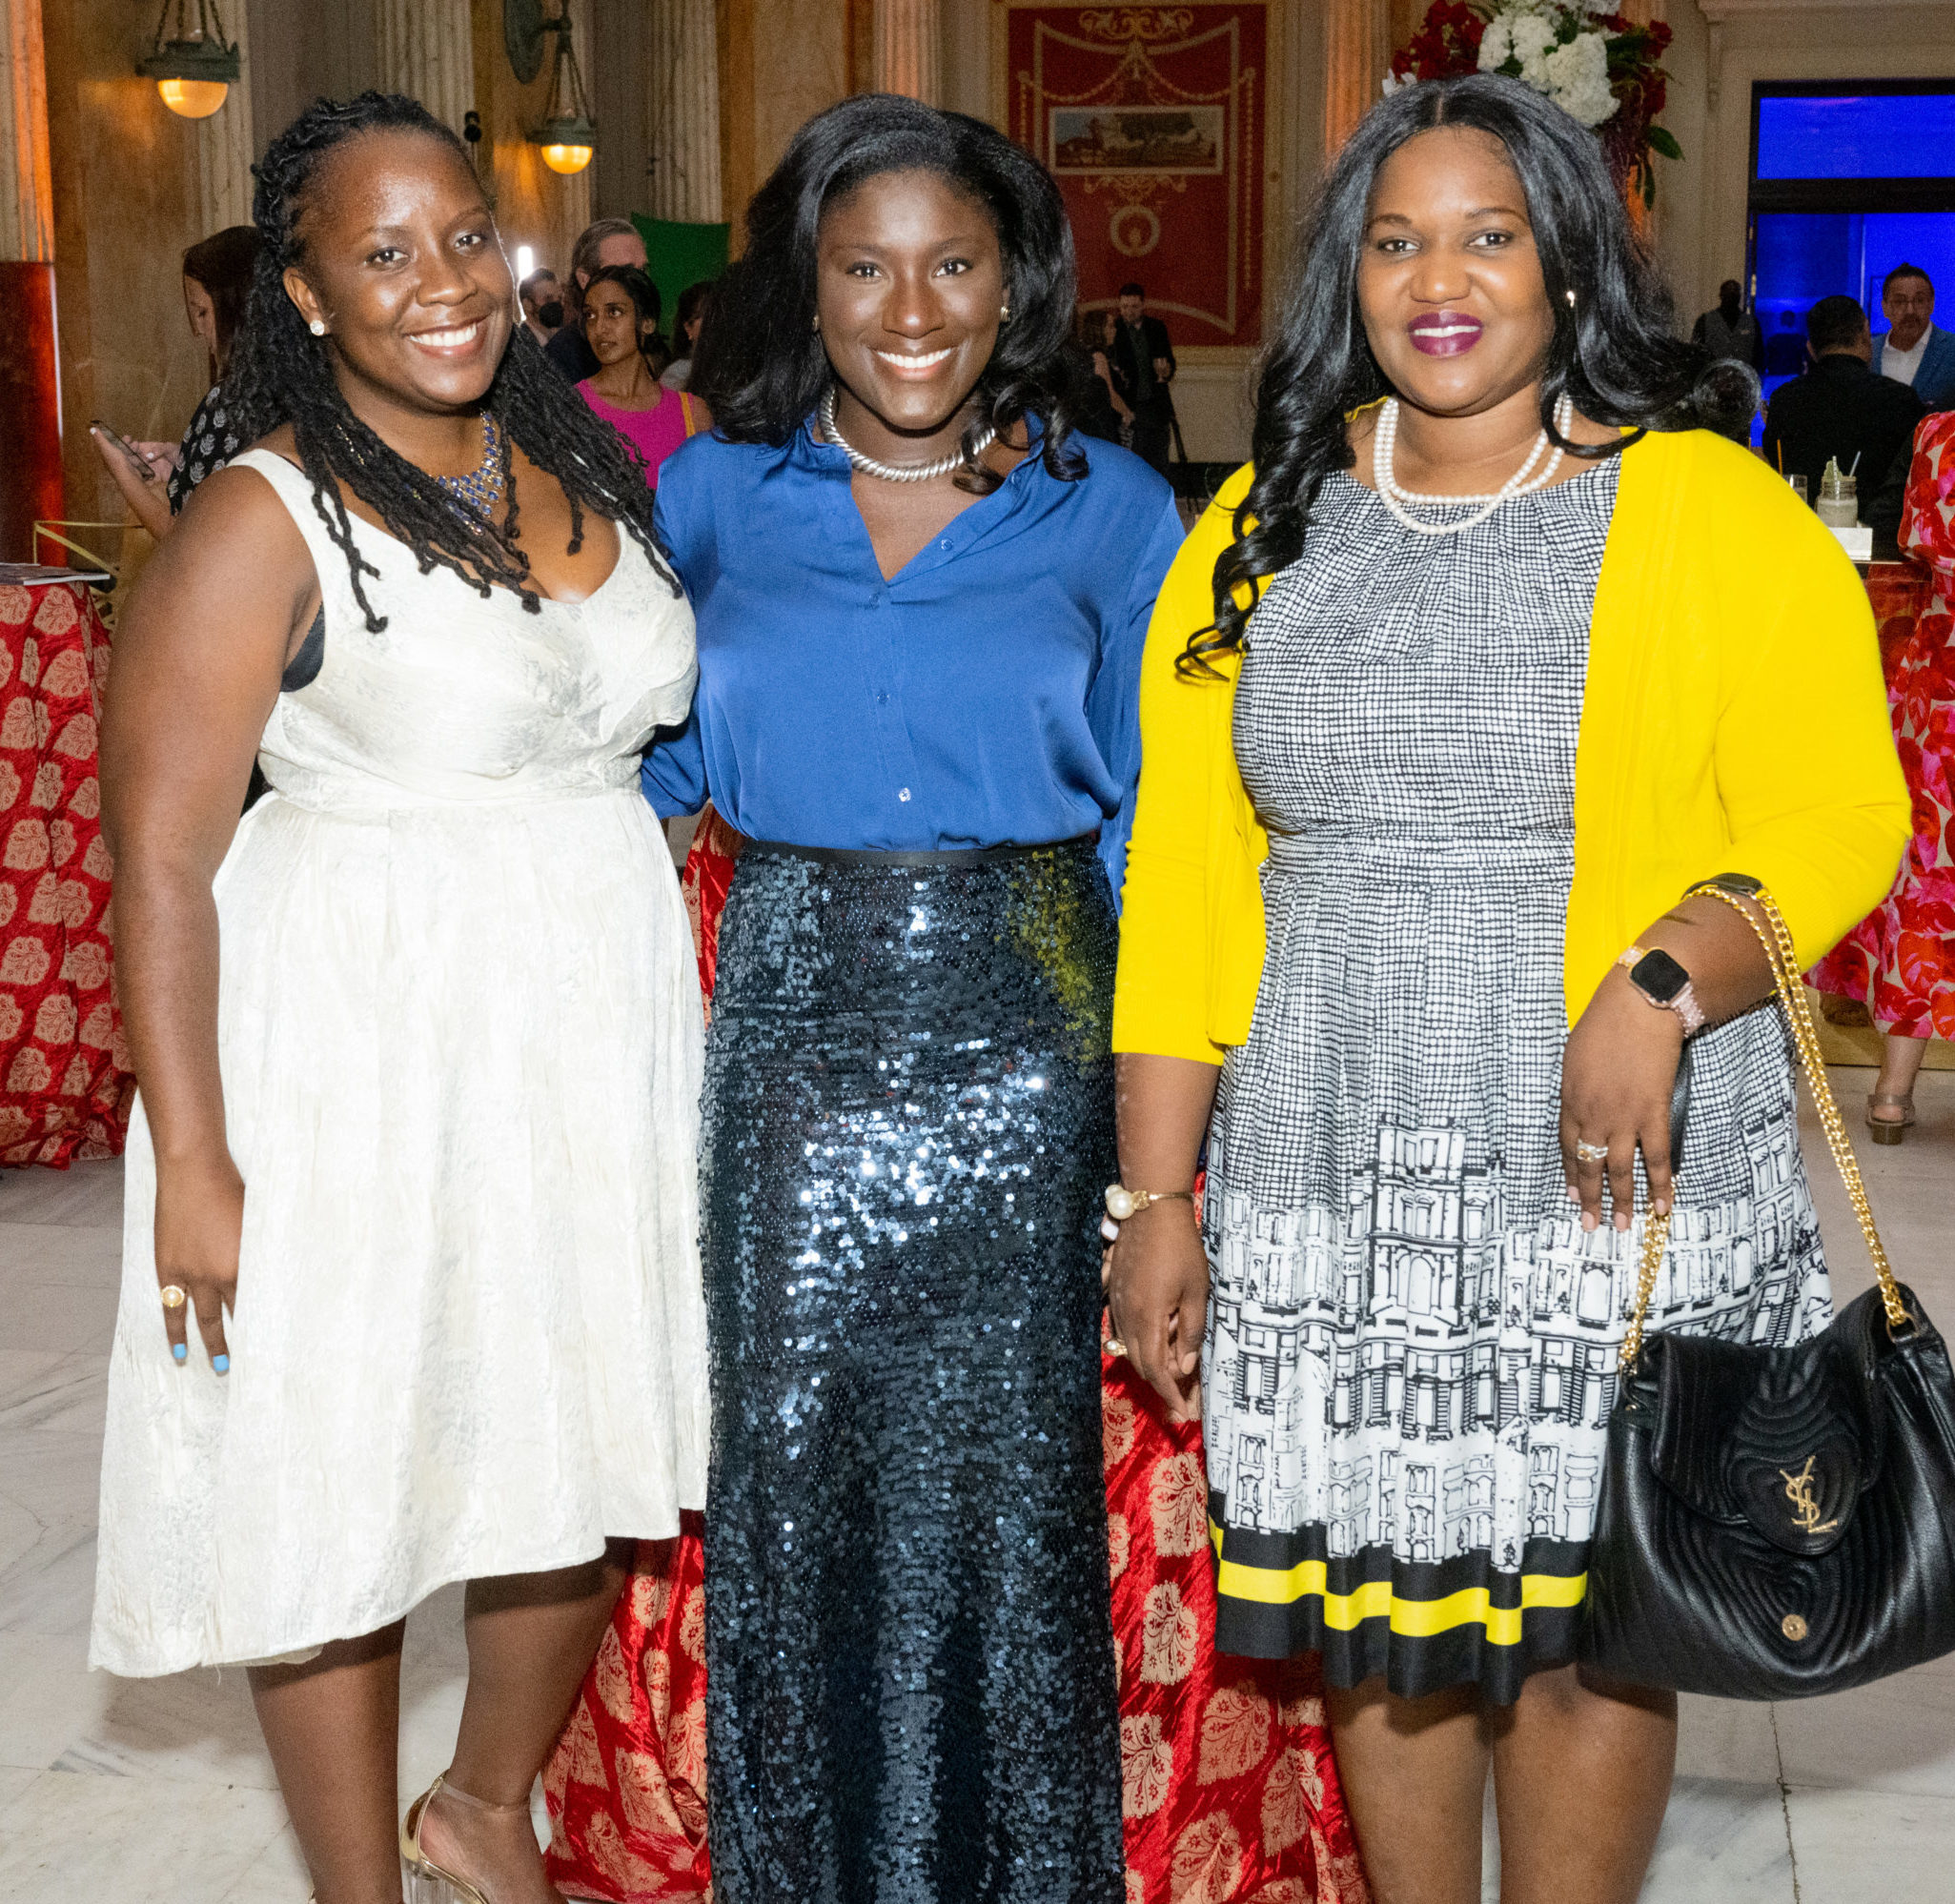 Elyse Holtz, Whitney Hubbard, and Aminata Ly at Washingtonian's 500 Most Influential Celebration